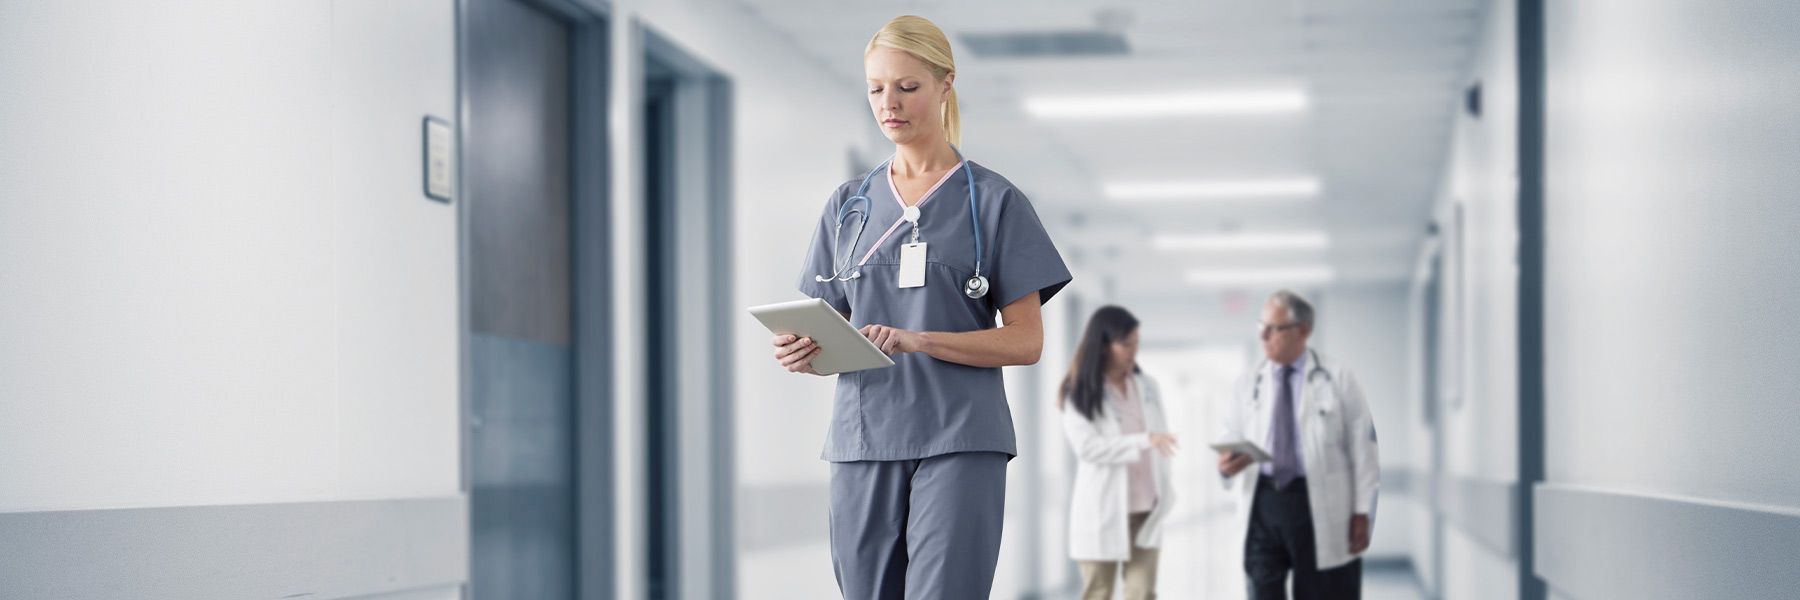 A nurse looks at a tablet as she walks down the hallway of a hospital. 